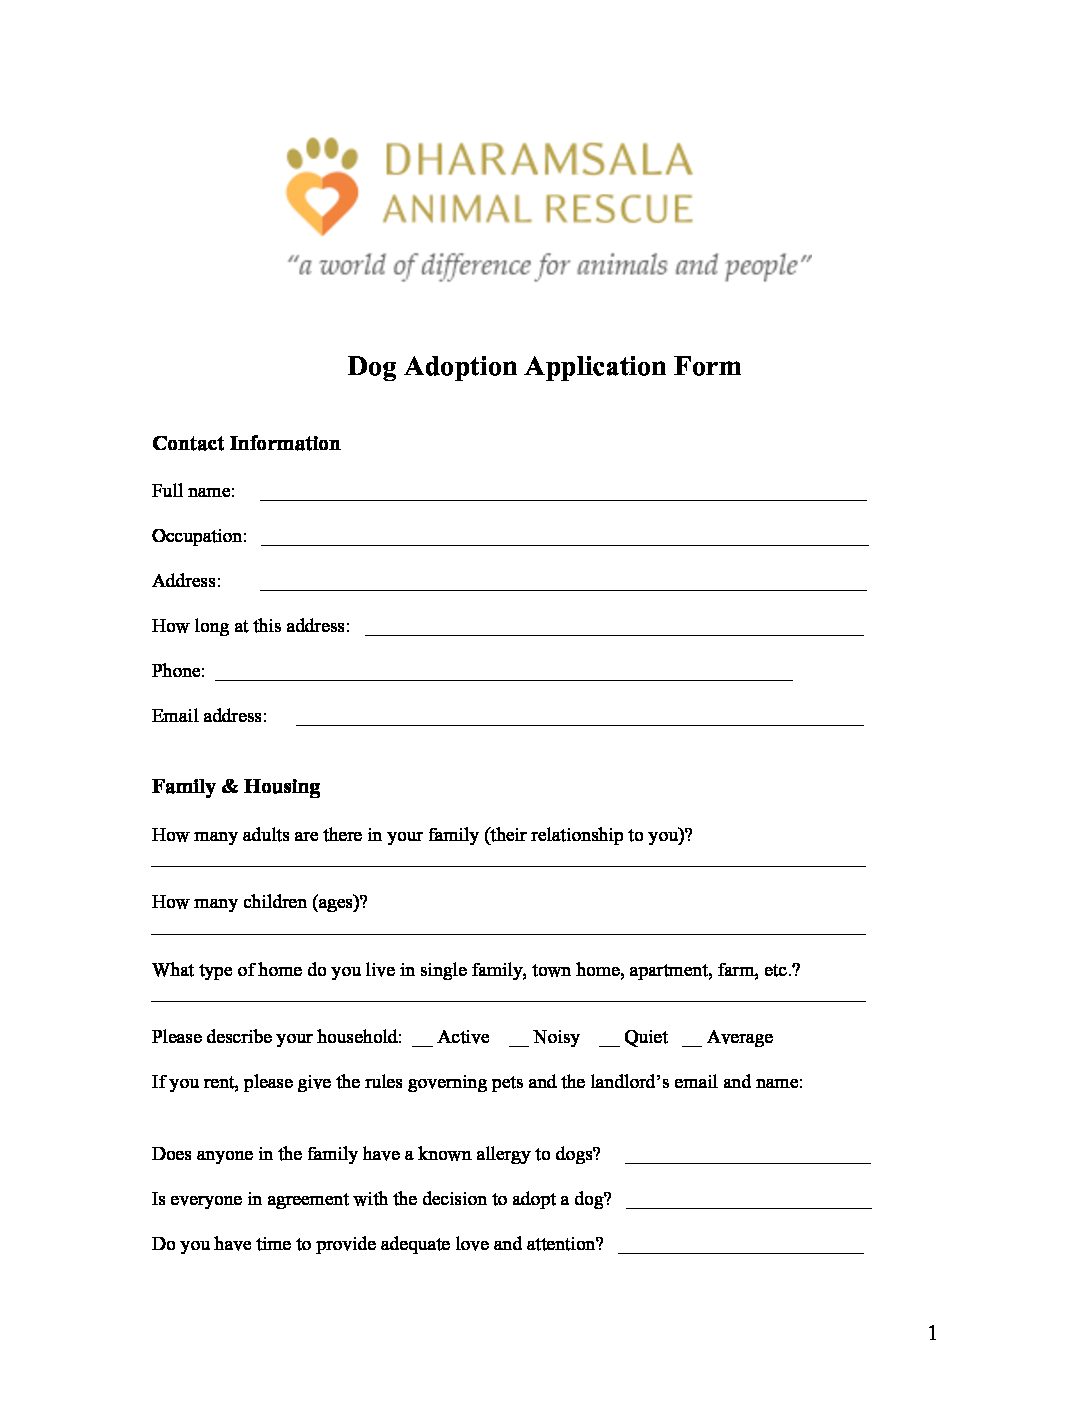 International Adoption Form - Dharamsala Animal Rescue